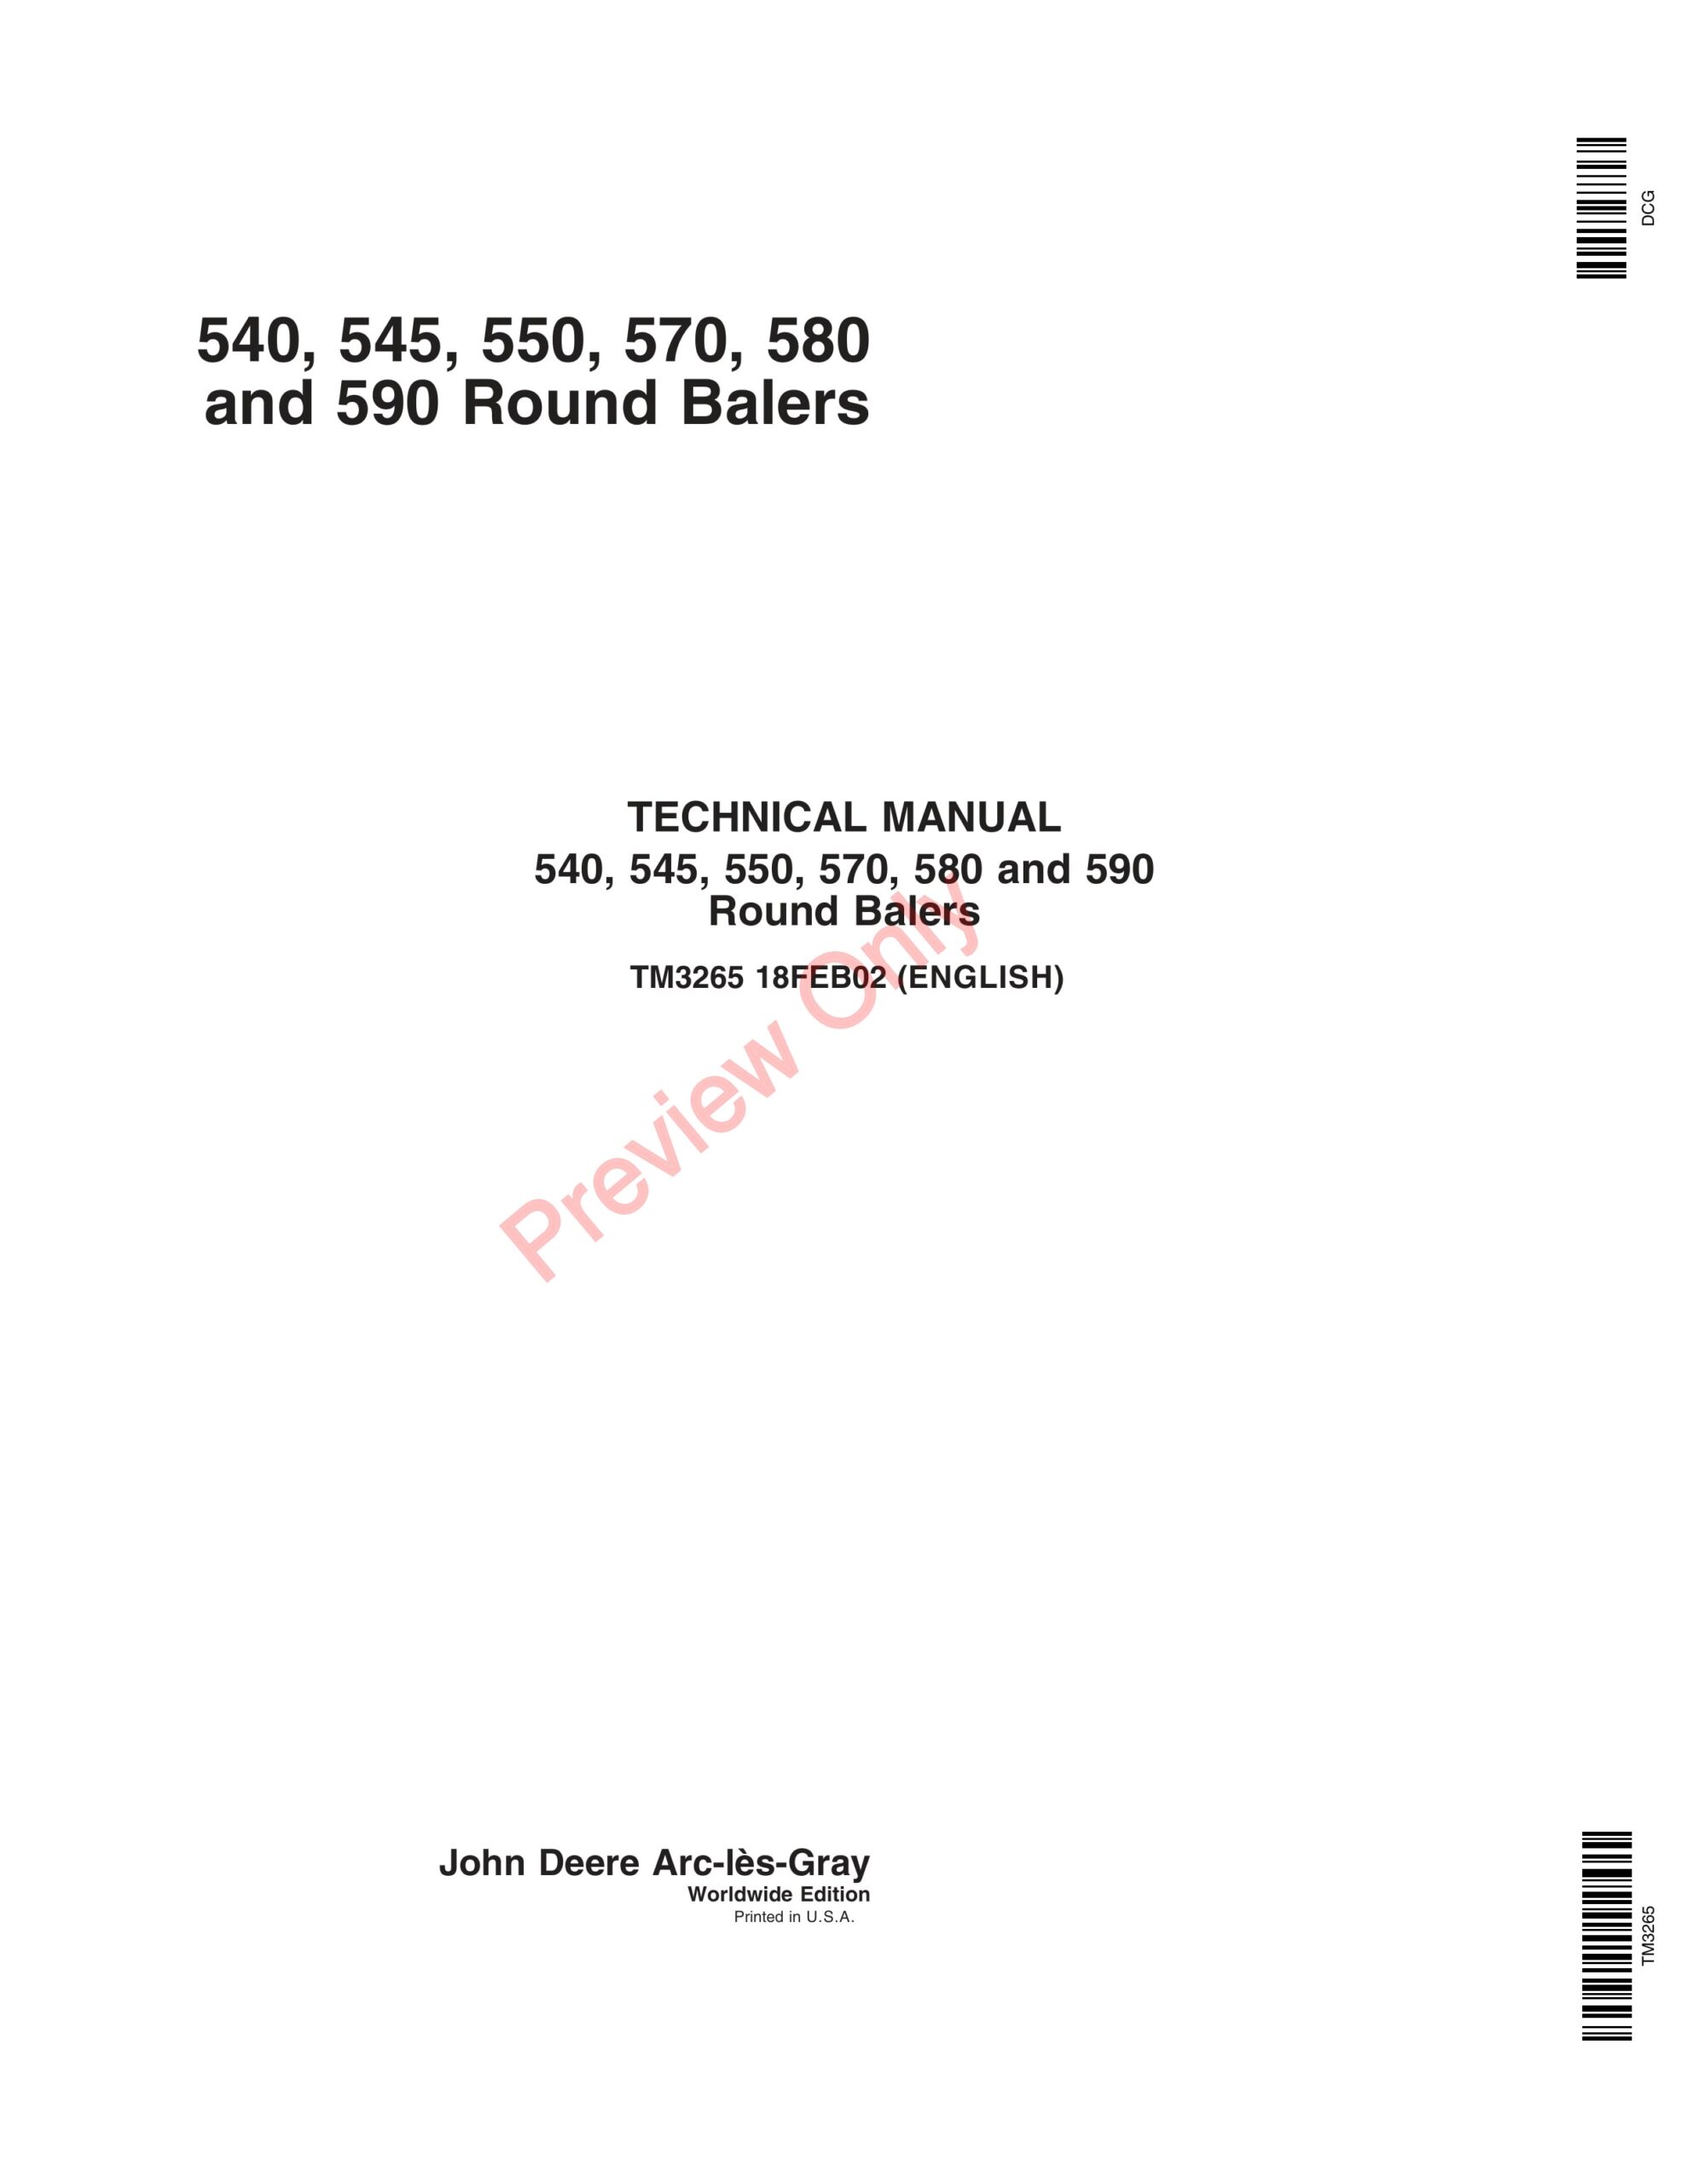 John Deere 540, 545, 550, 570, 580 and 590 Round Balers Technical Manual TM3265 18FEB02-1